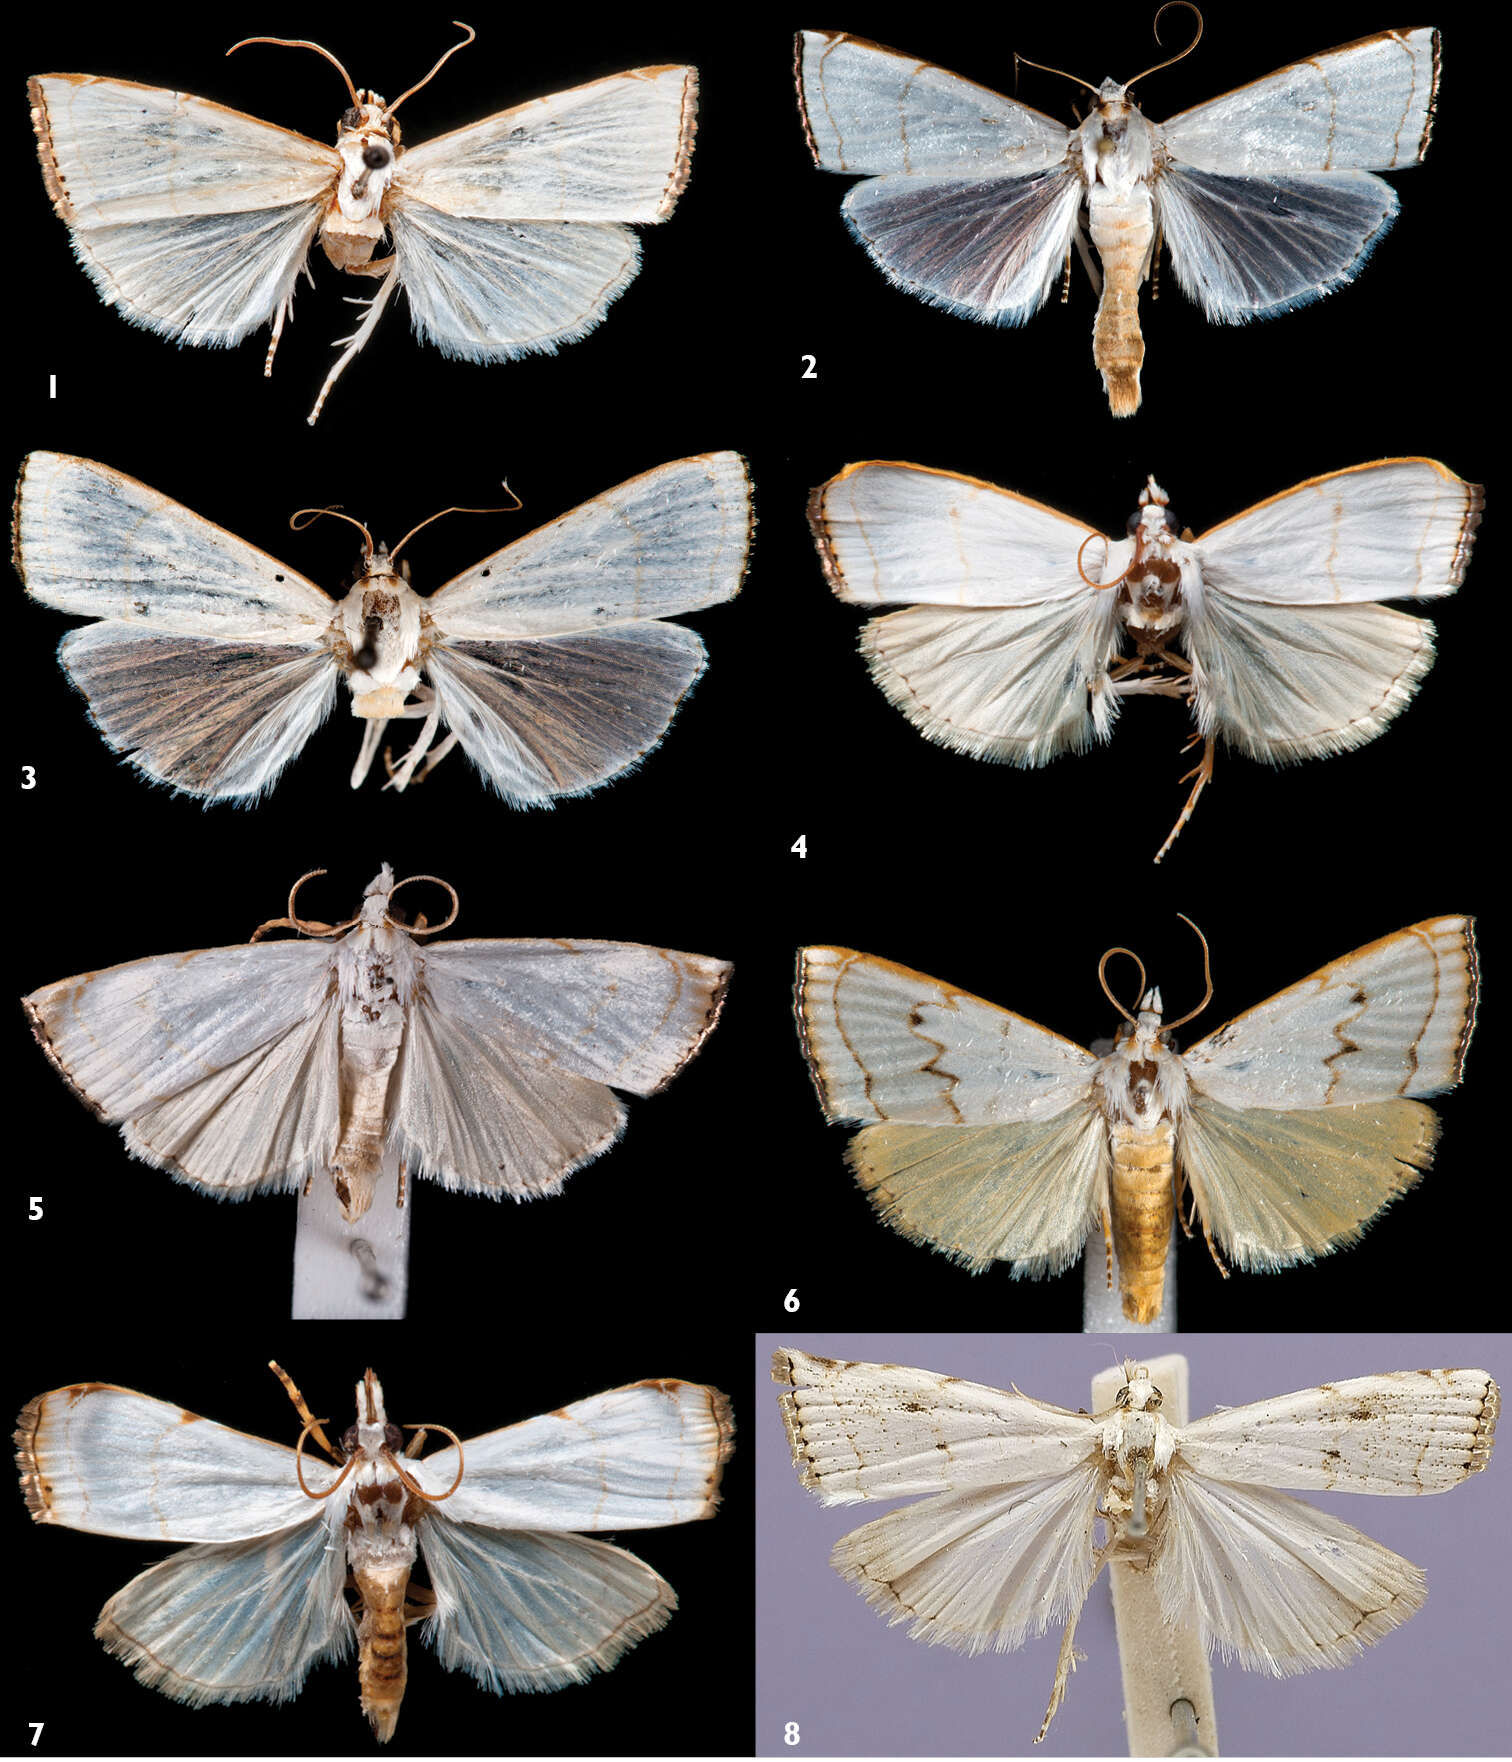 Image of Catharylla serrabonita T. Léger & B. Landry